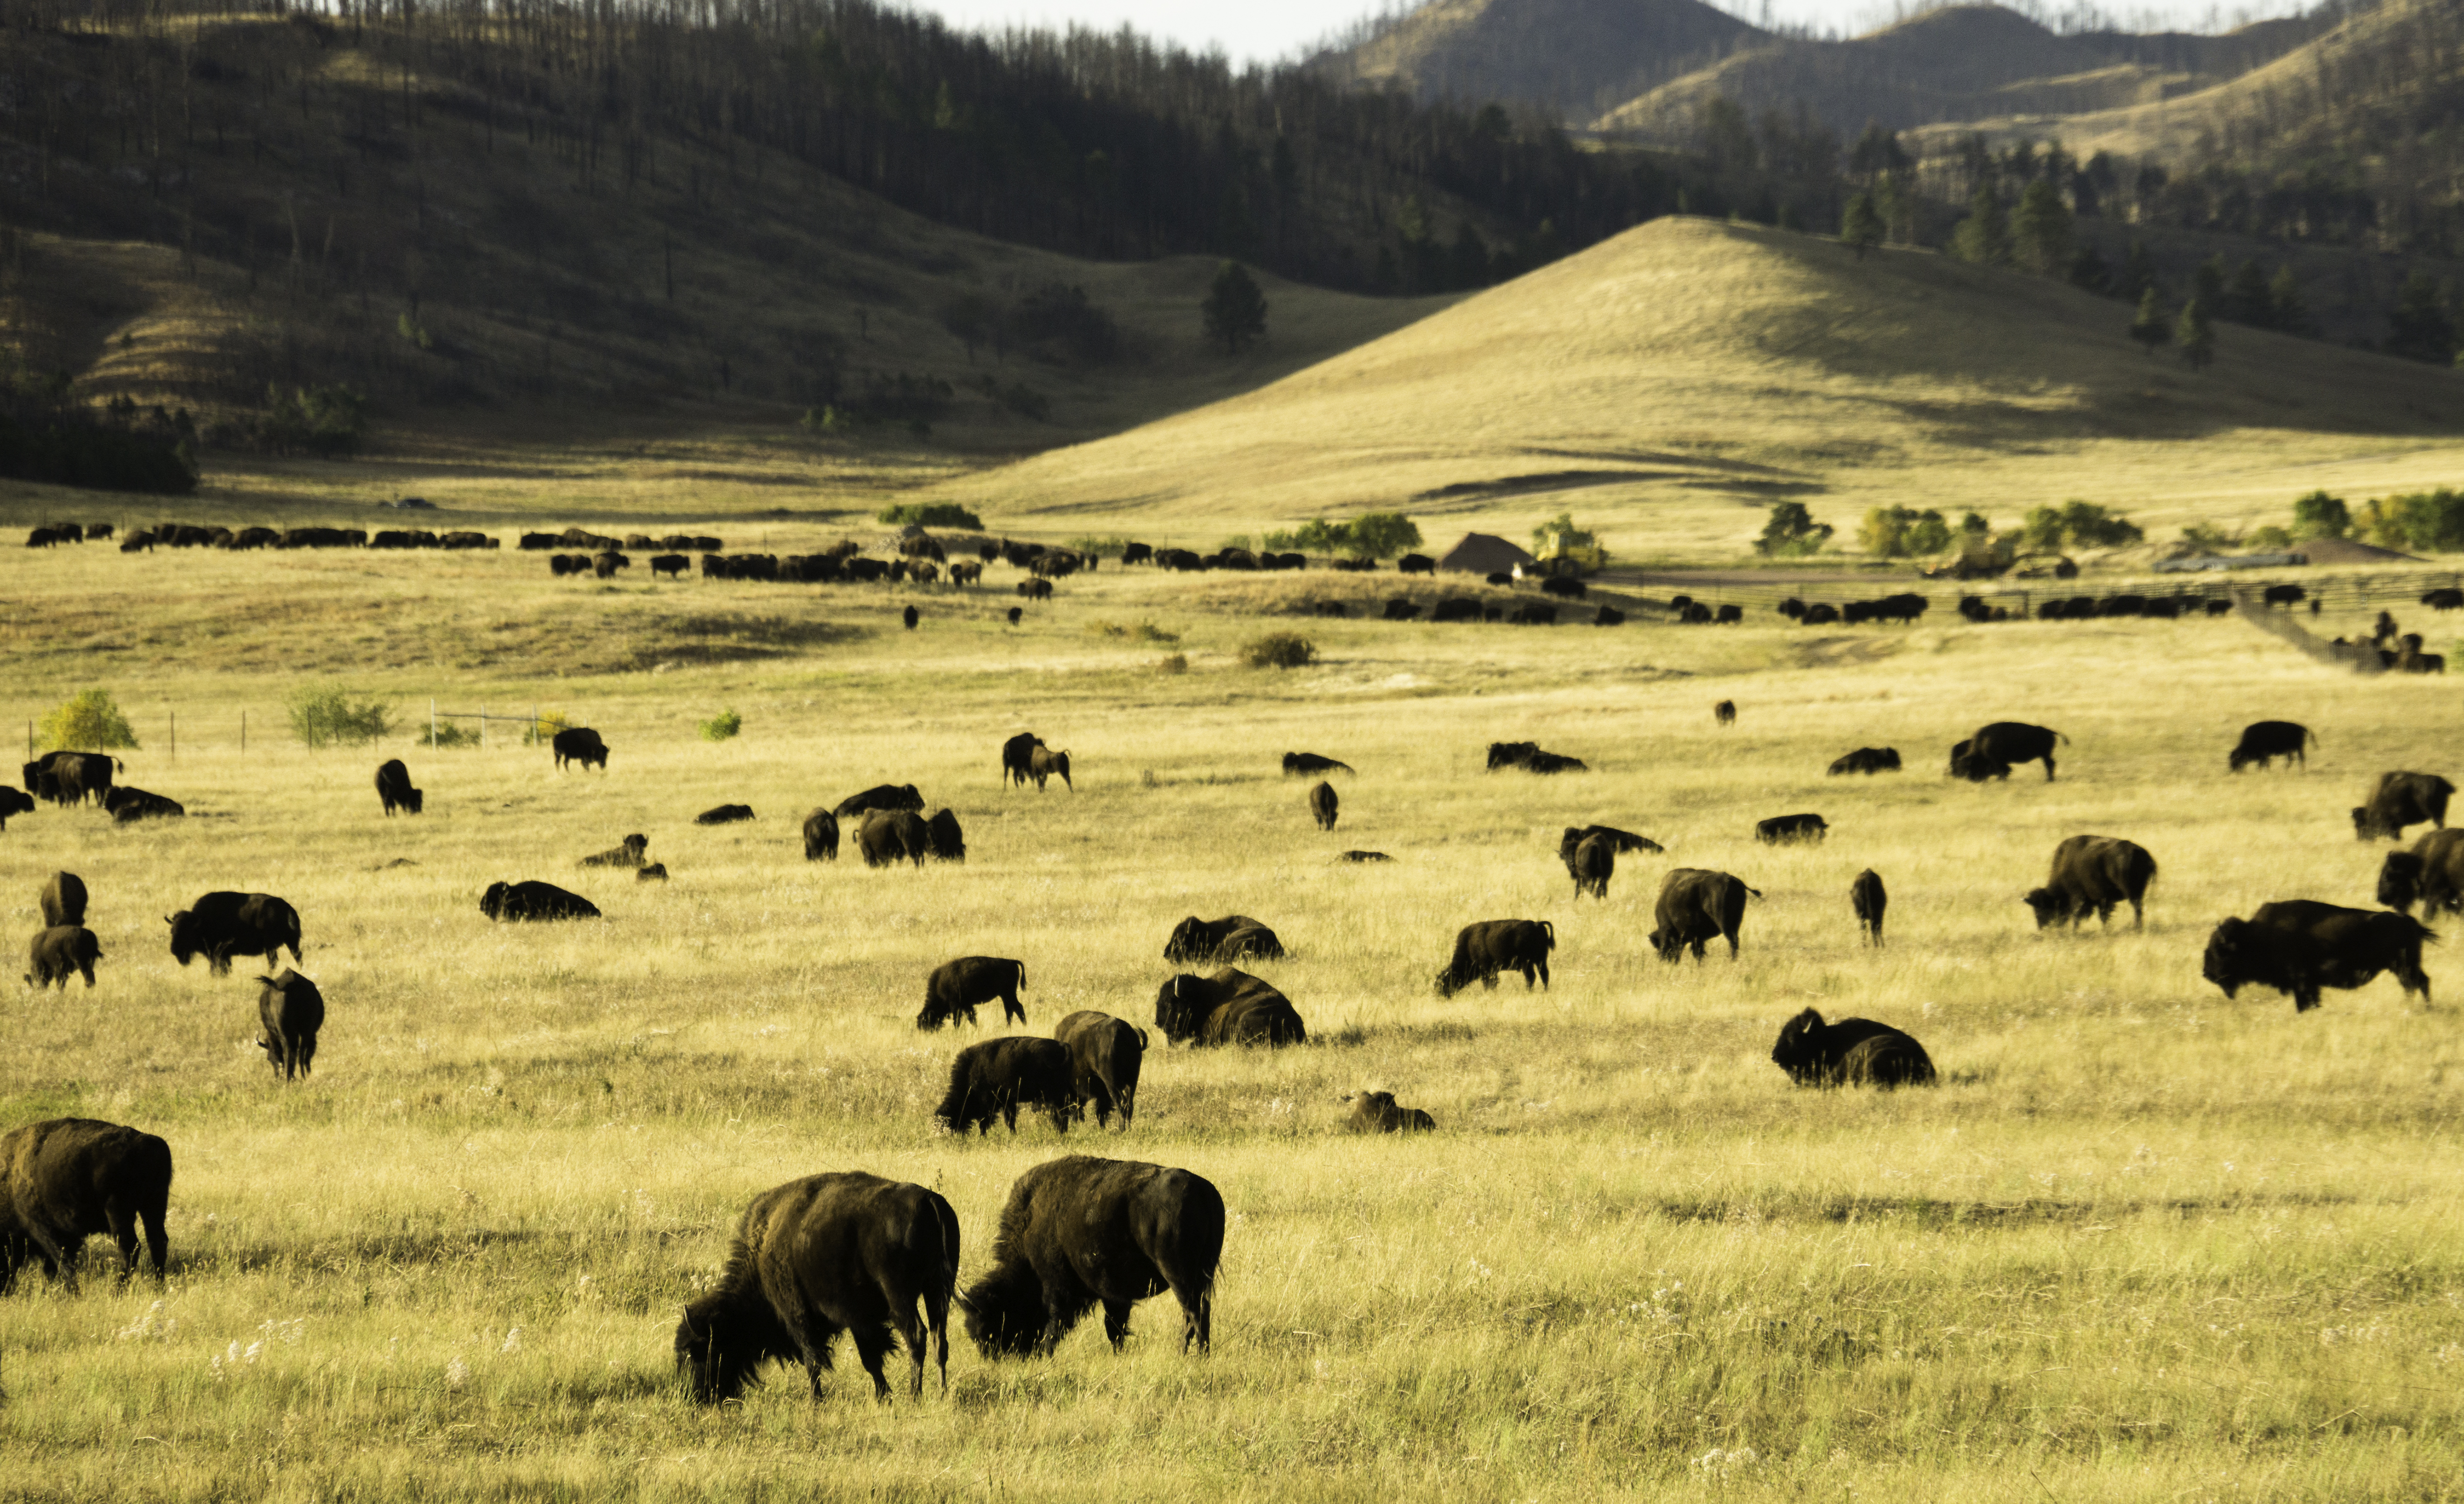 Herd of Buffalo in Custer State Park in South Dakota.